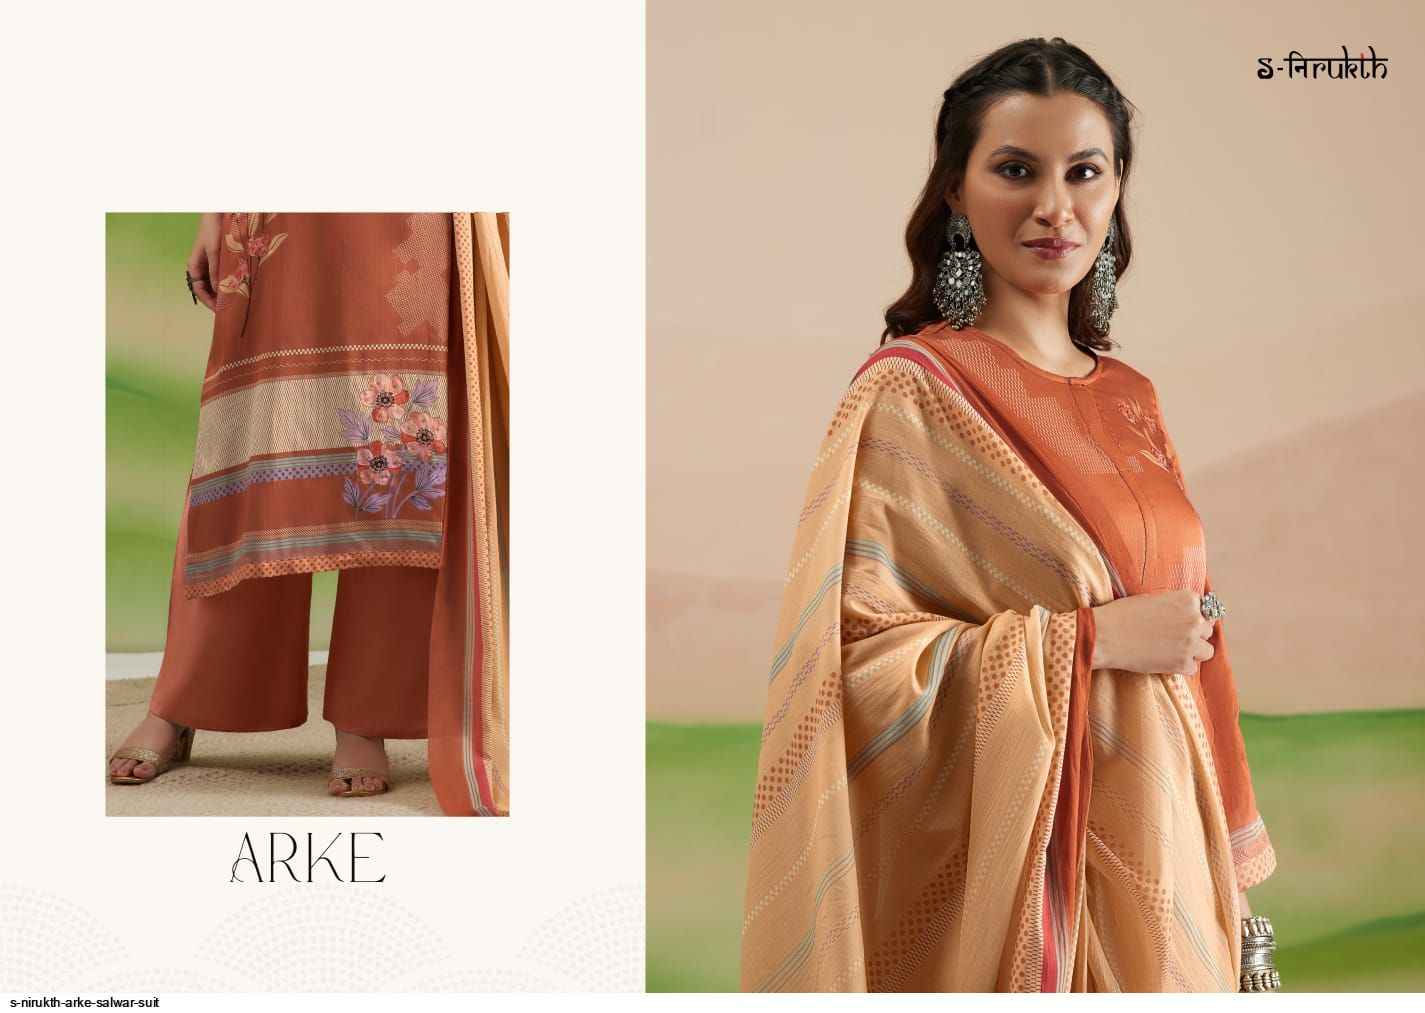 S Nirukth Arke Cotton Dress Material 8 pcs Catalogue